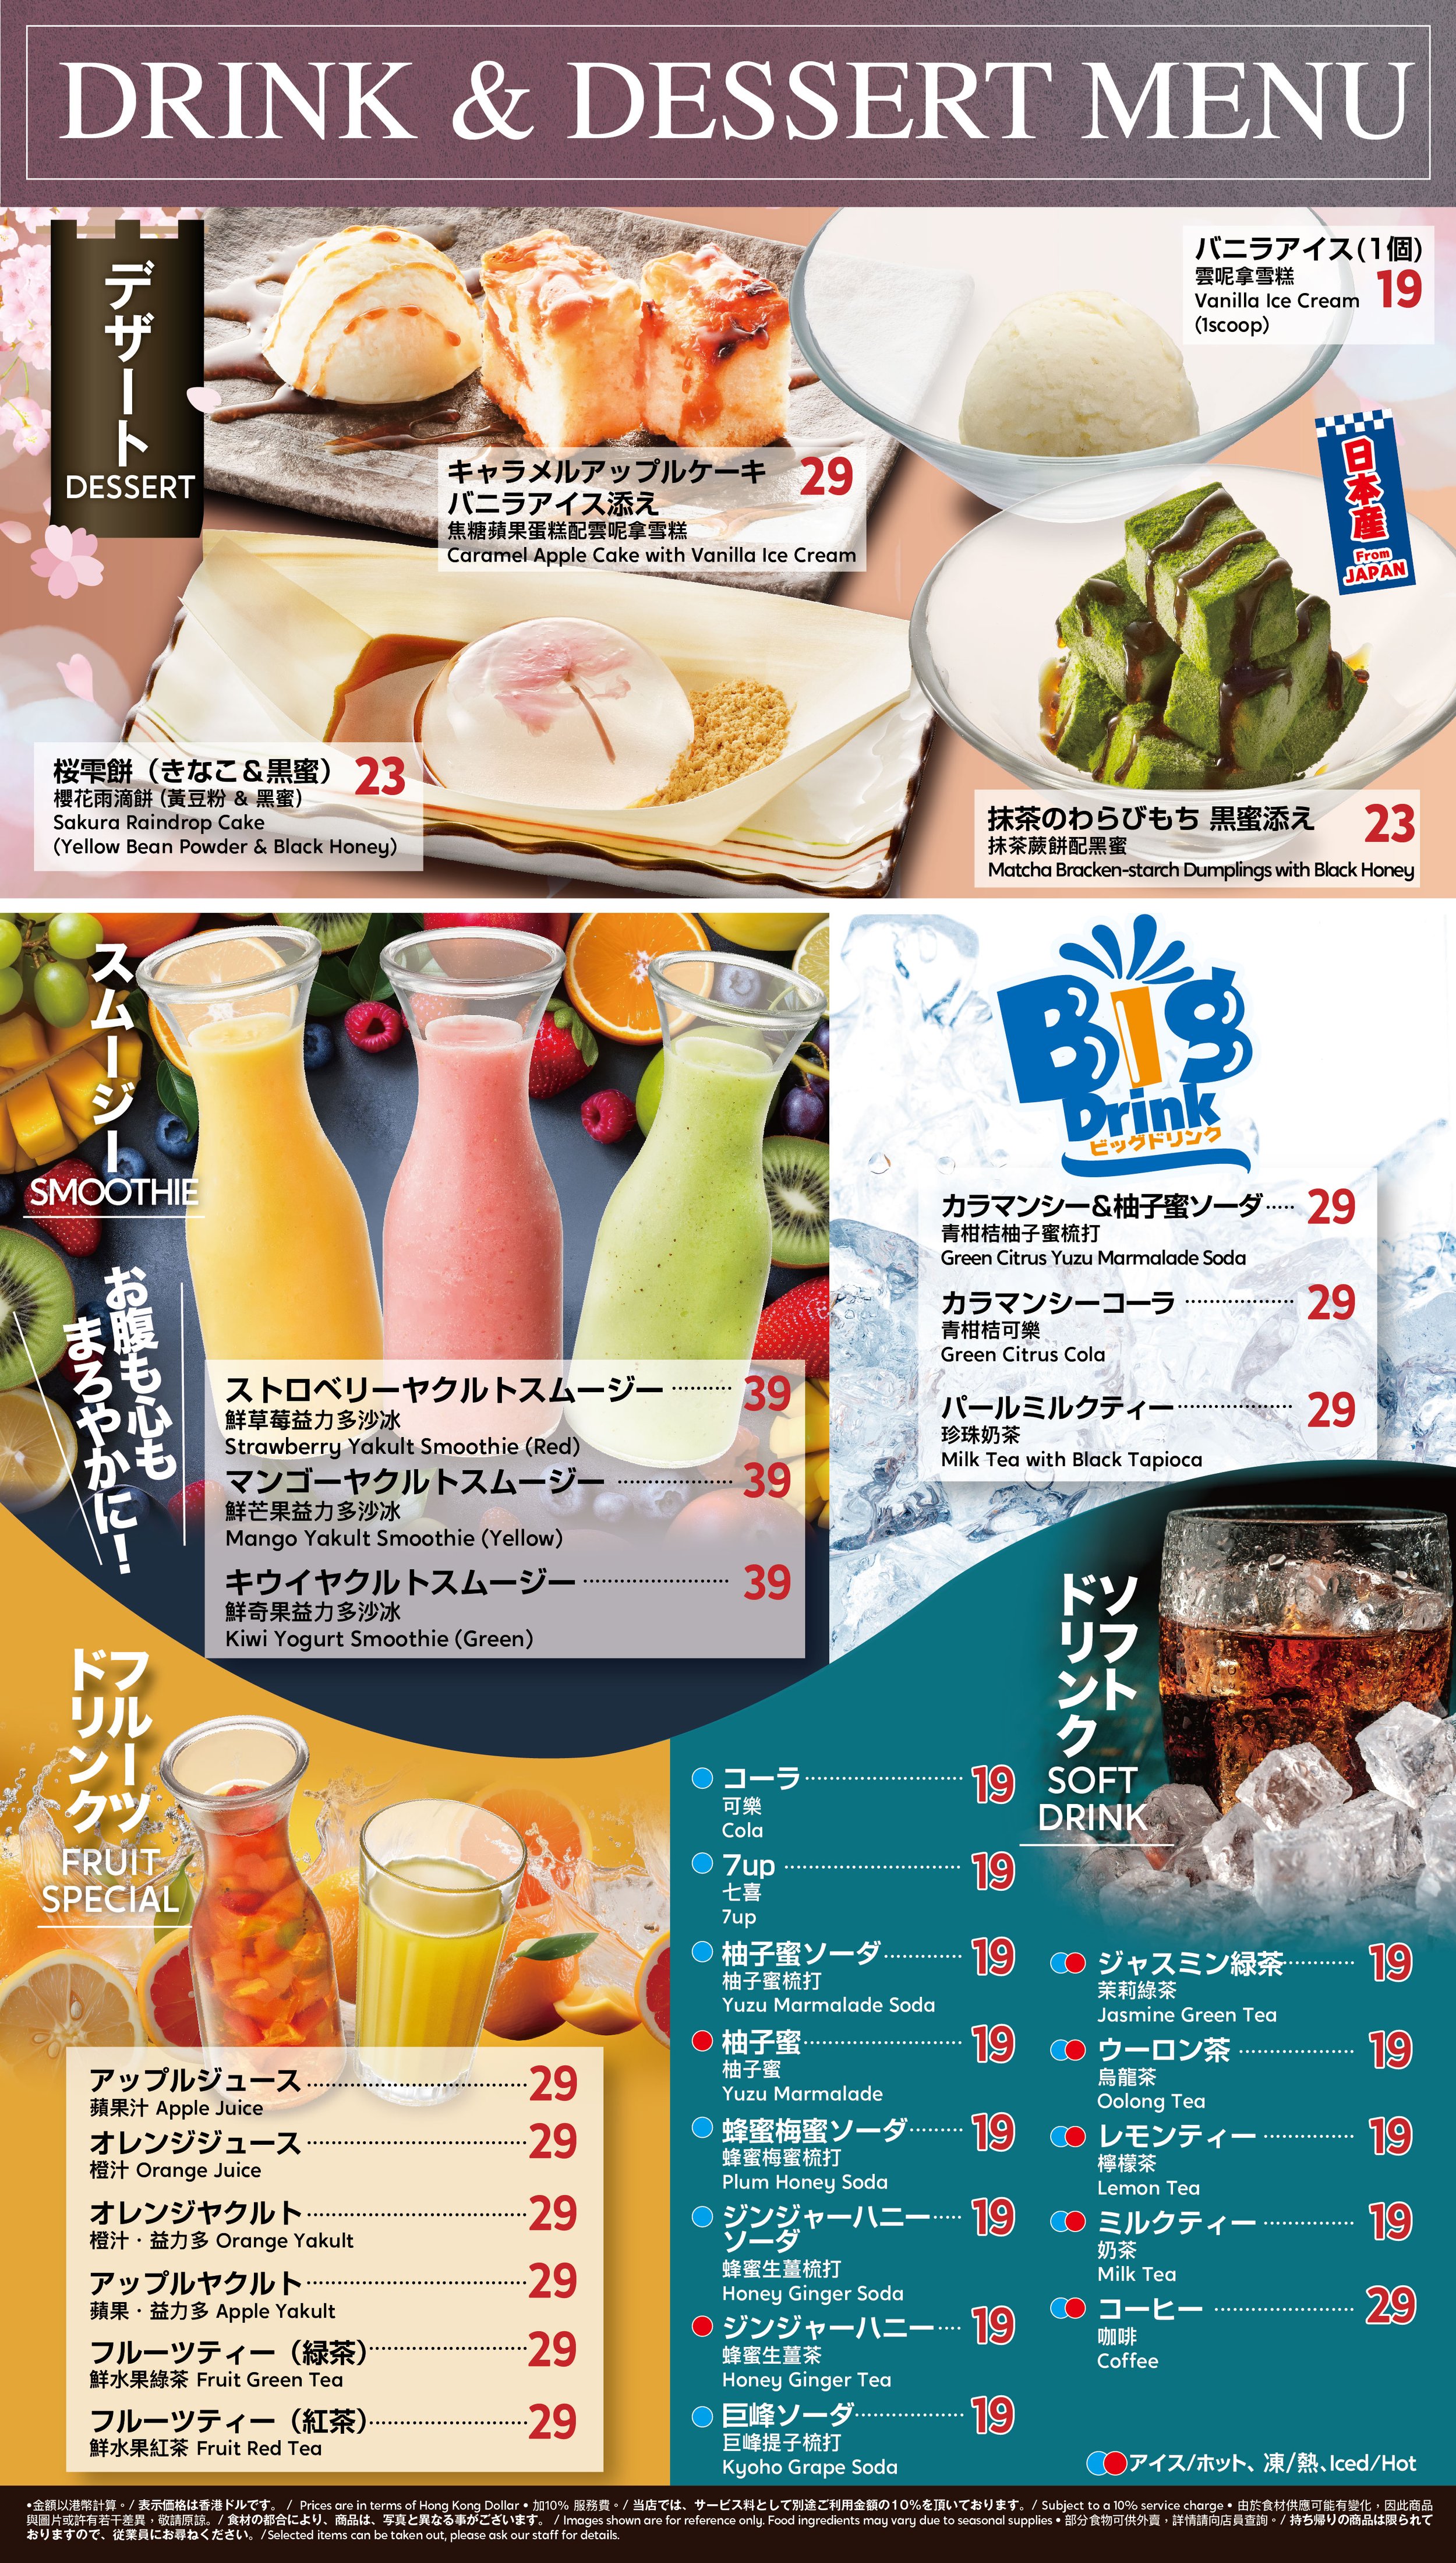 Watmi_Drink menu_front_AW-01.jpg